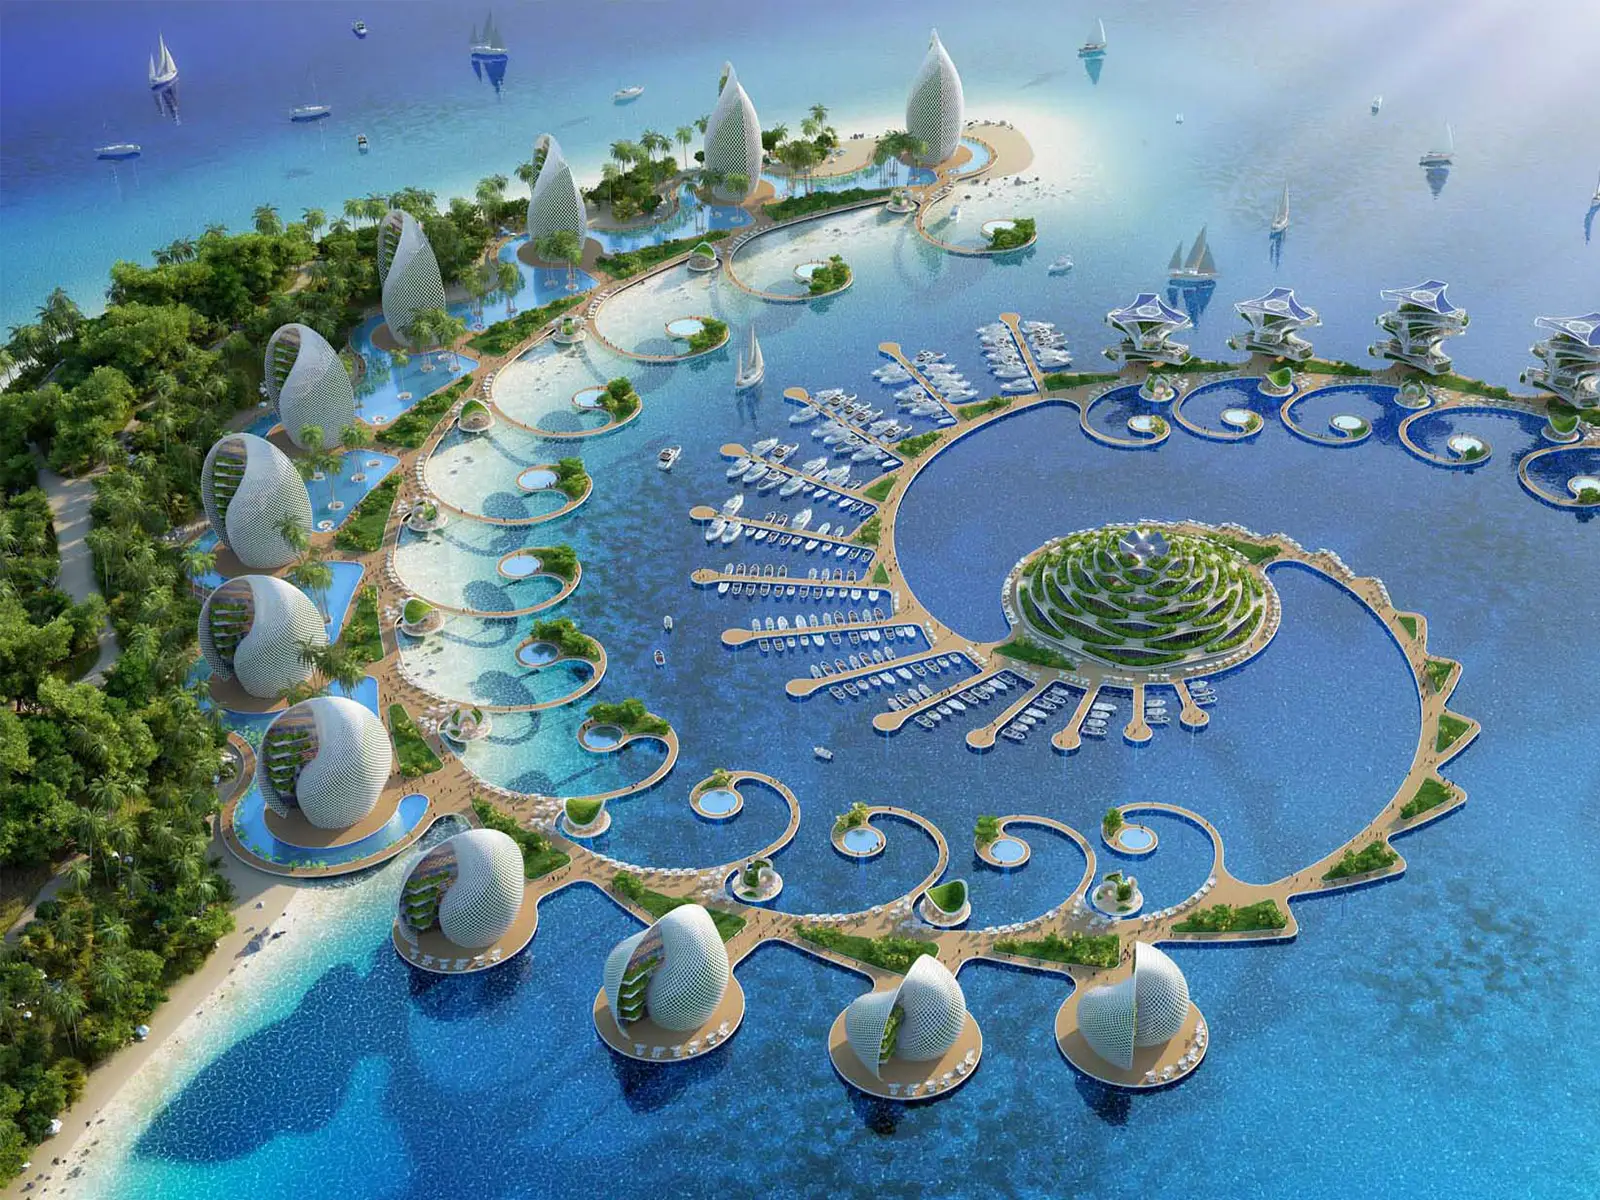 Nautilus il visionario resort green delle Filippine